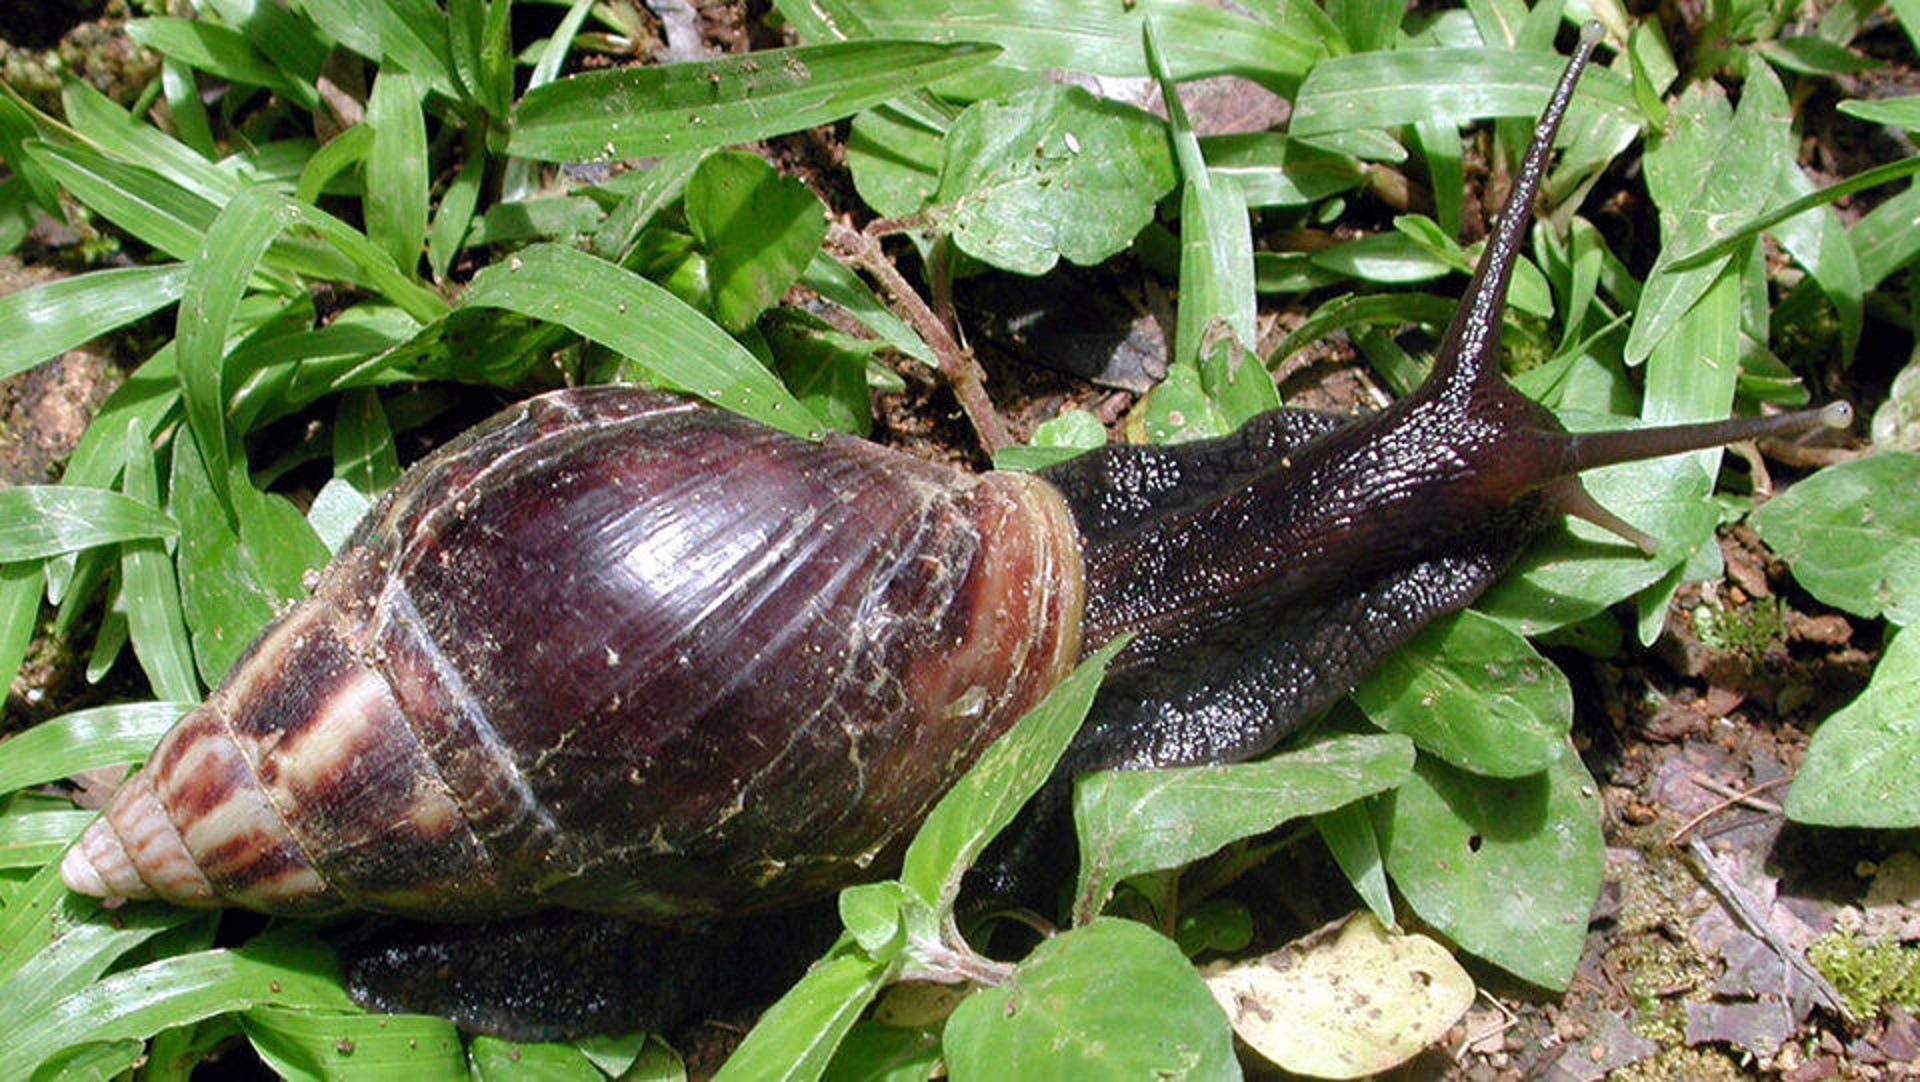 A large snail on a plant.